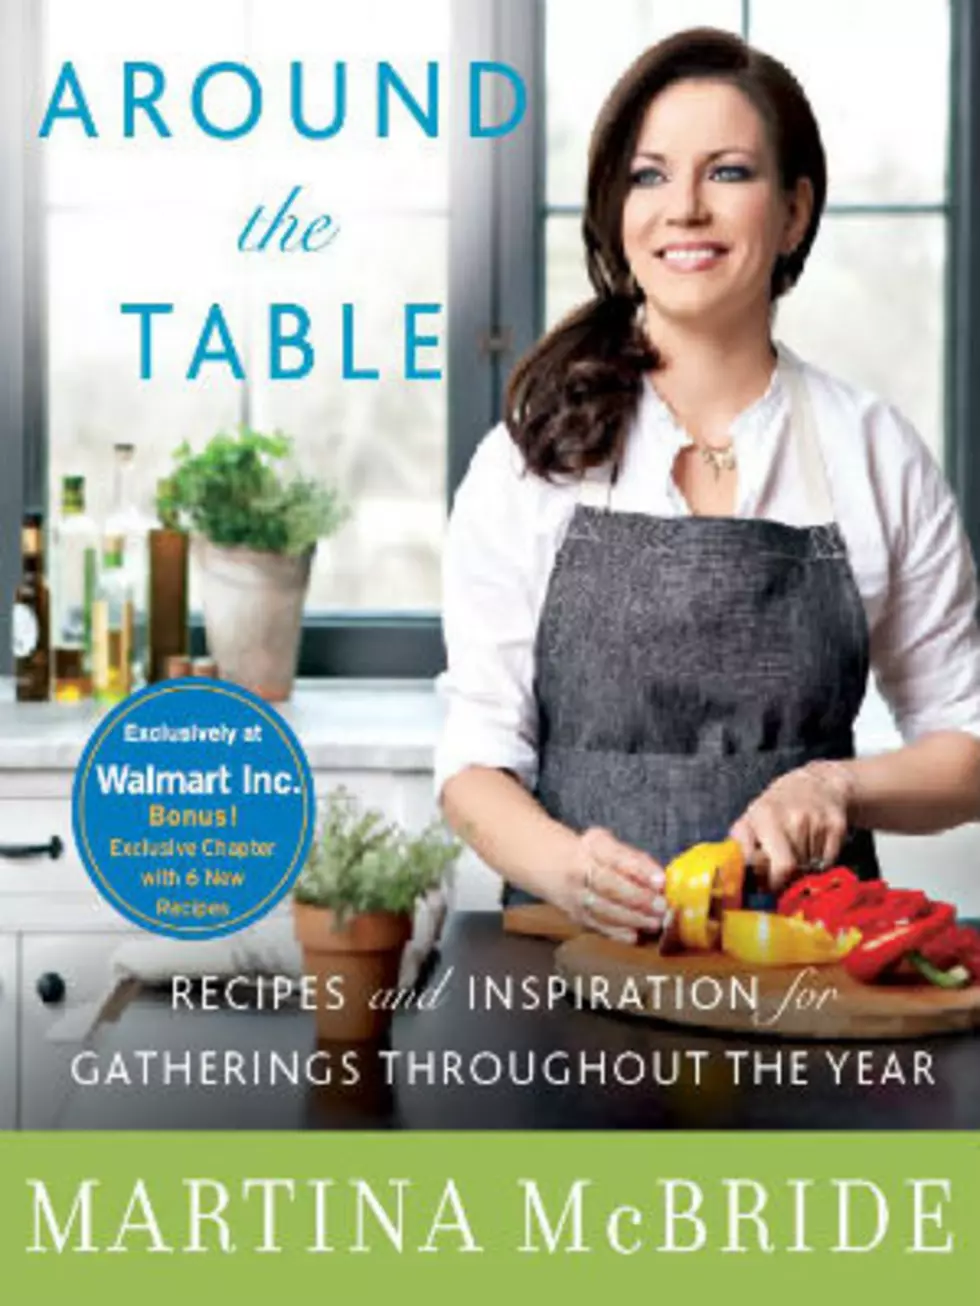 Get Martina McBride’s Zucchini-Tomato Tart Recipe and Win a Signed Copy of Her Cookbook!